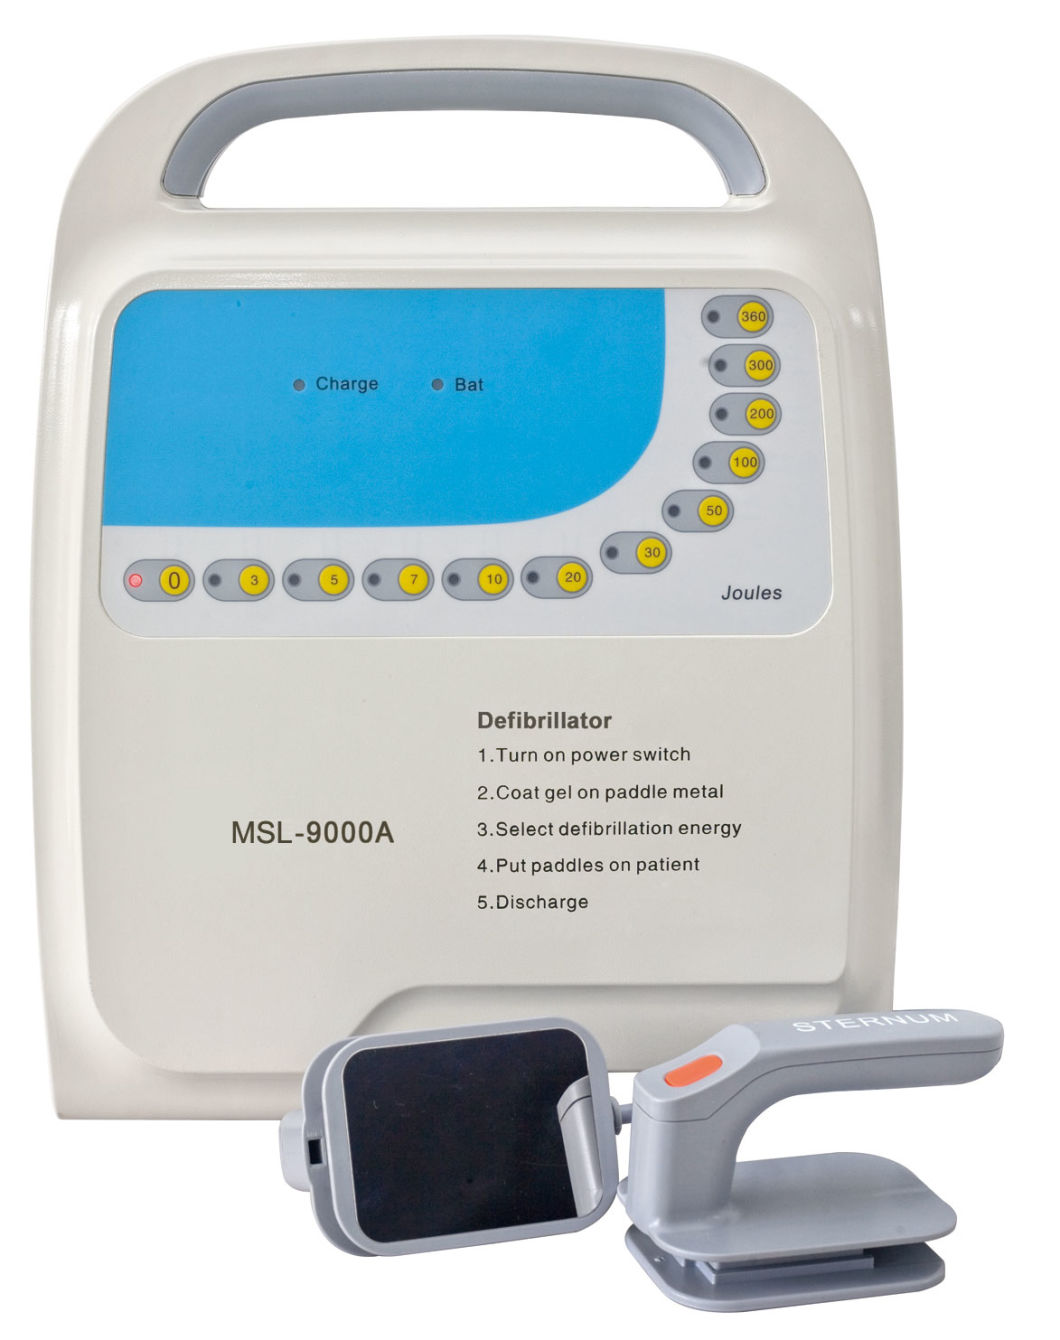 High Resolution True-Color Portable Monophasic Defi-Monitor Biphasic Cardiac Defibrillator